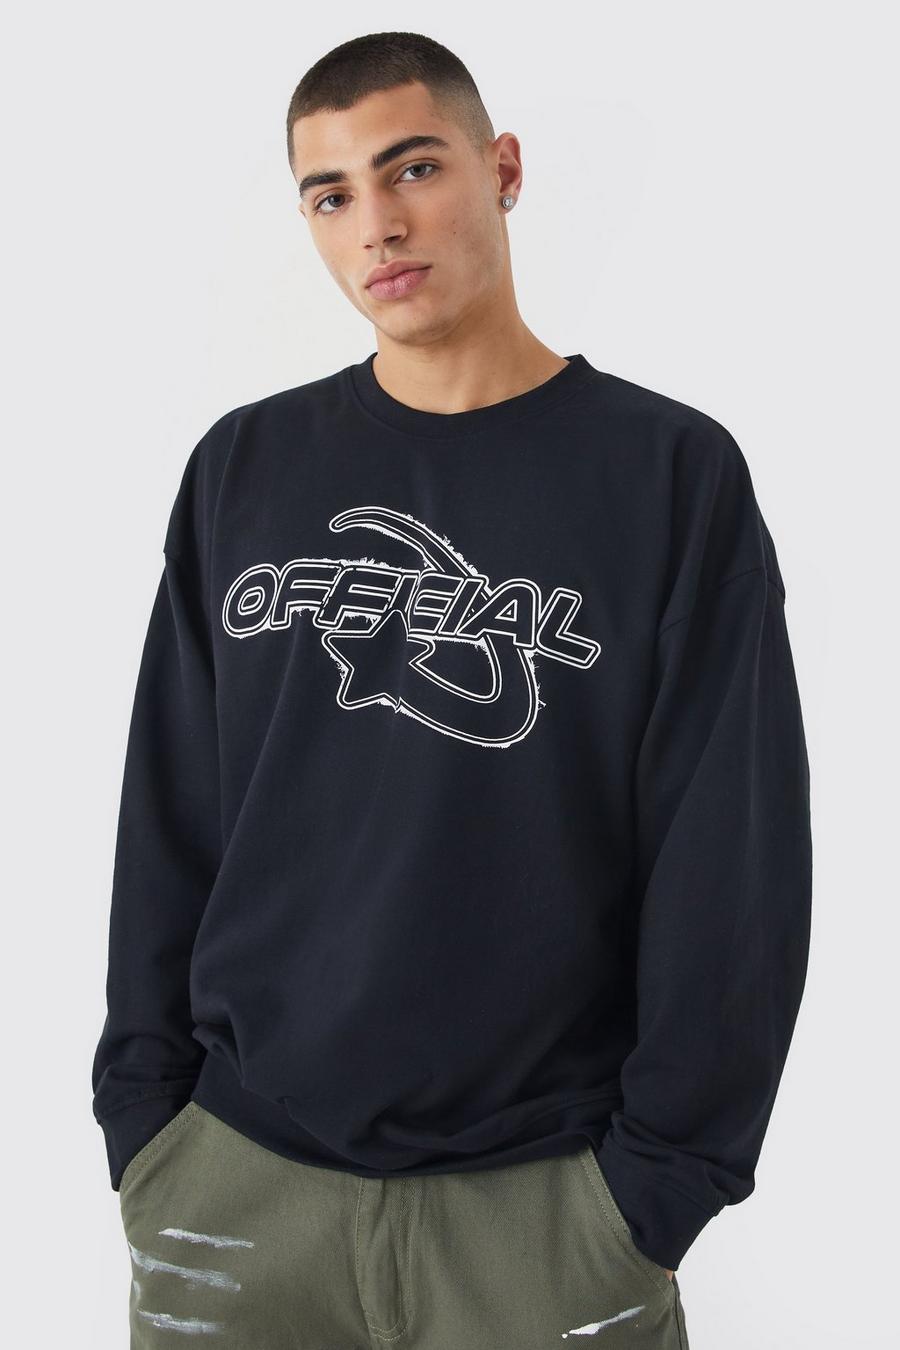 Black Oversized Ofcl Star Sweatshirt